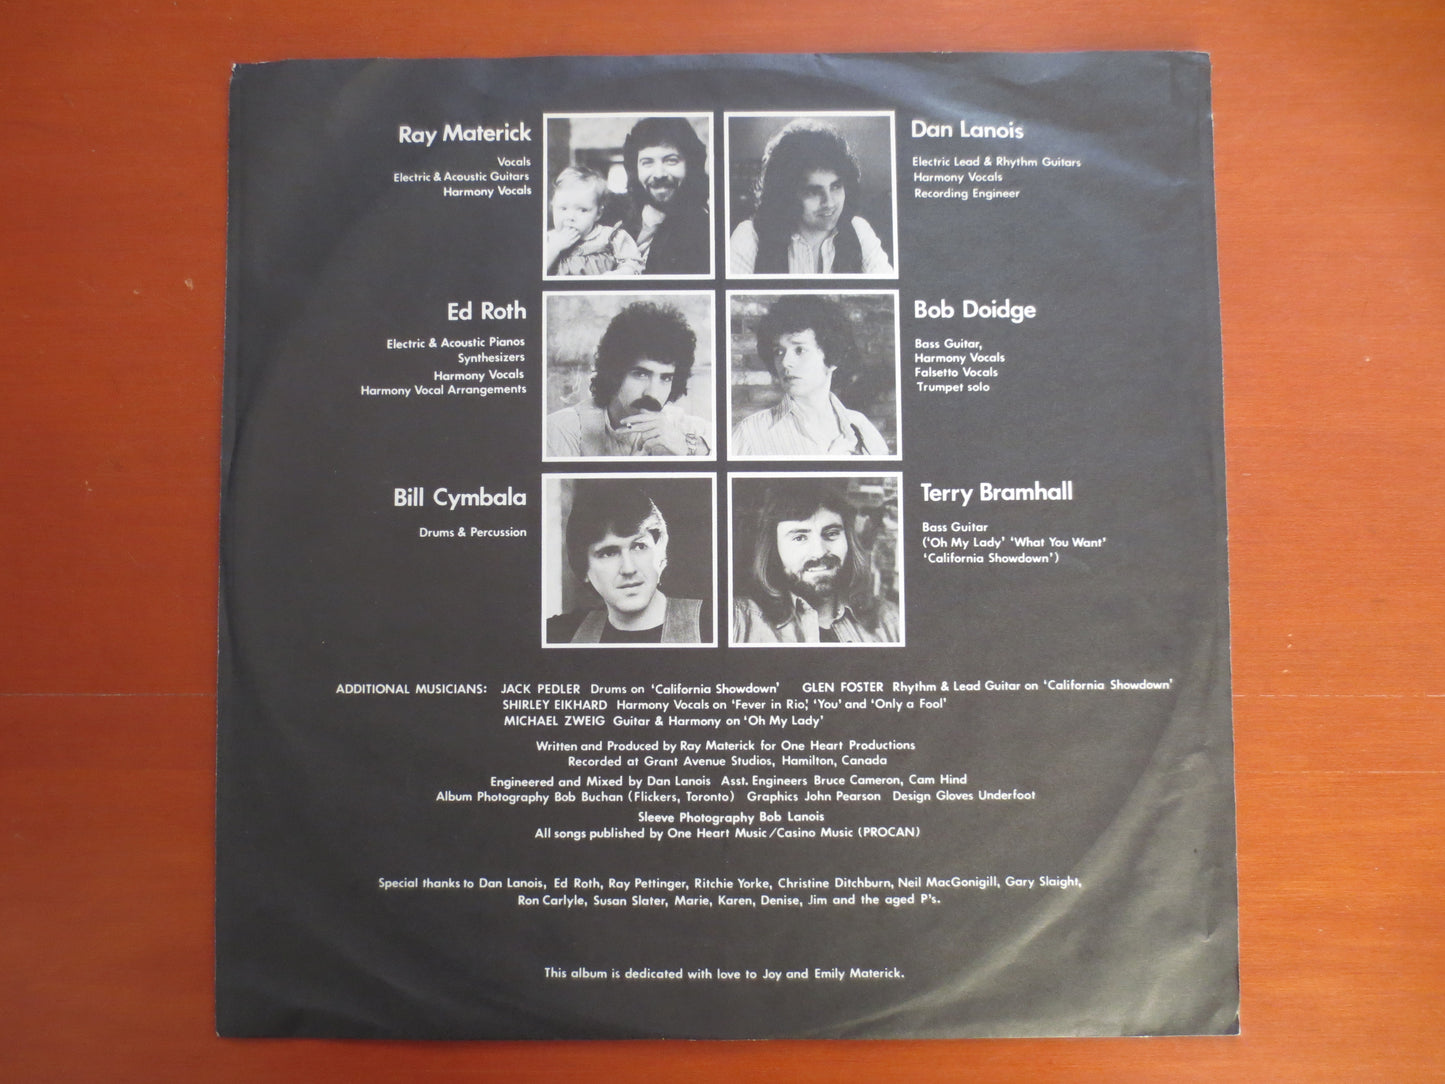 RAY MATERICK, FEVER in Rio, Ray Materick Record, Ray Materick Albums, Country Records, Vinyl Records, Vinyl, 1979 Records